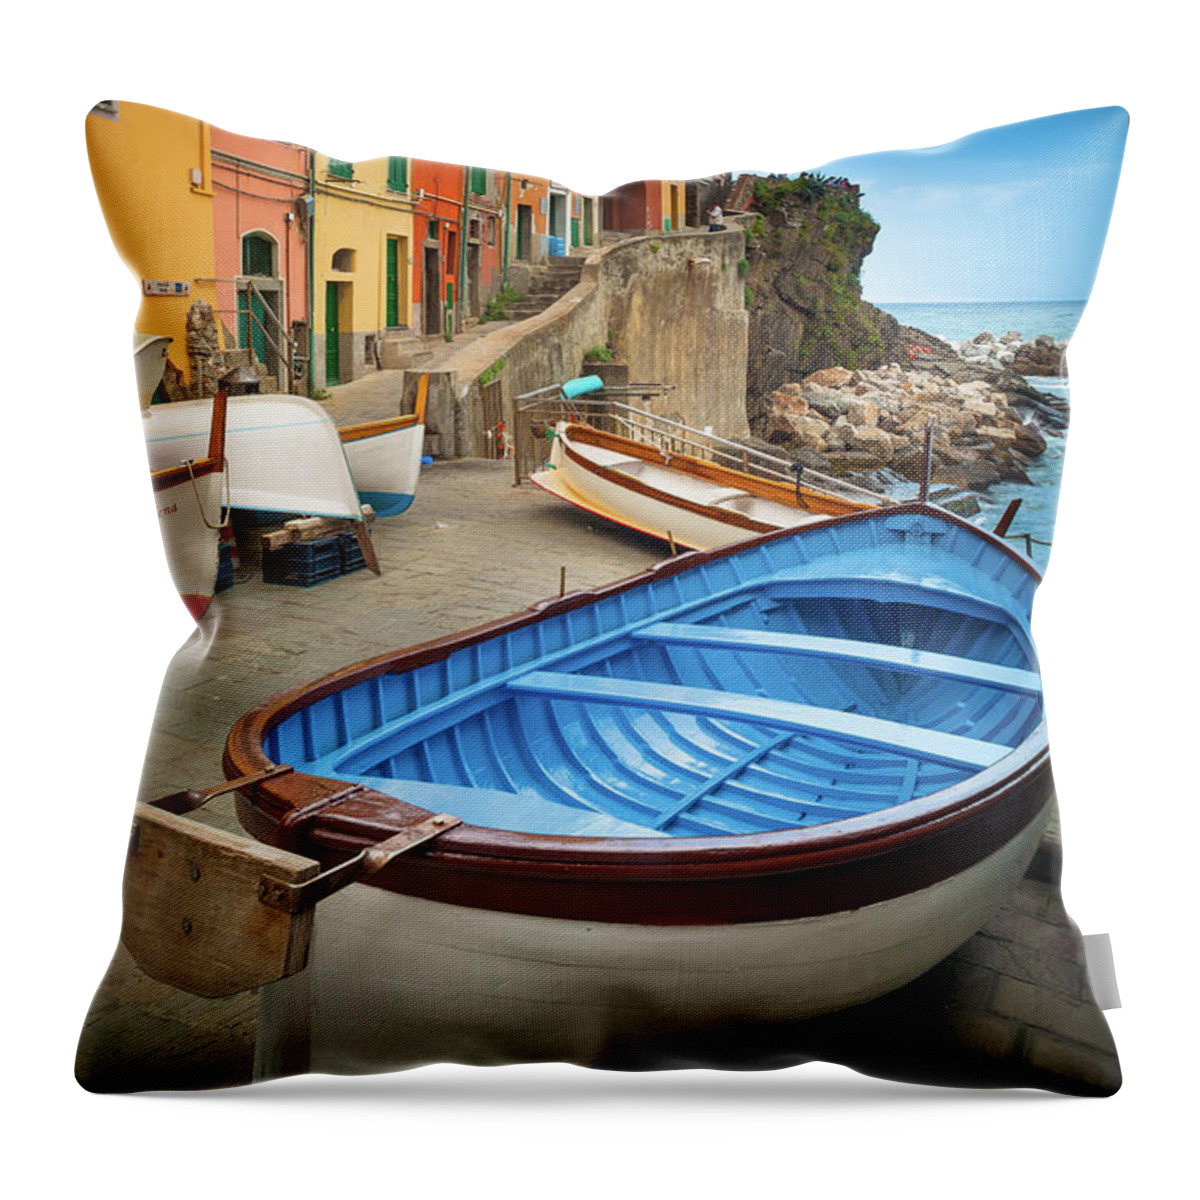 Riomaggiore Throw Pillow featuring the photograph Rio Maggiore Boat by Inge Johnsson